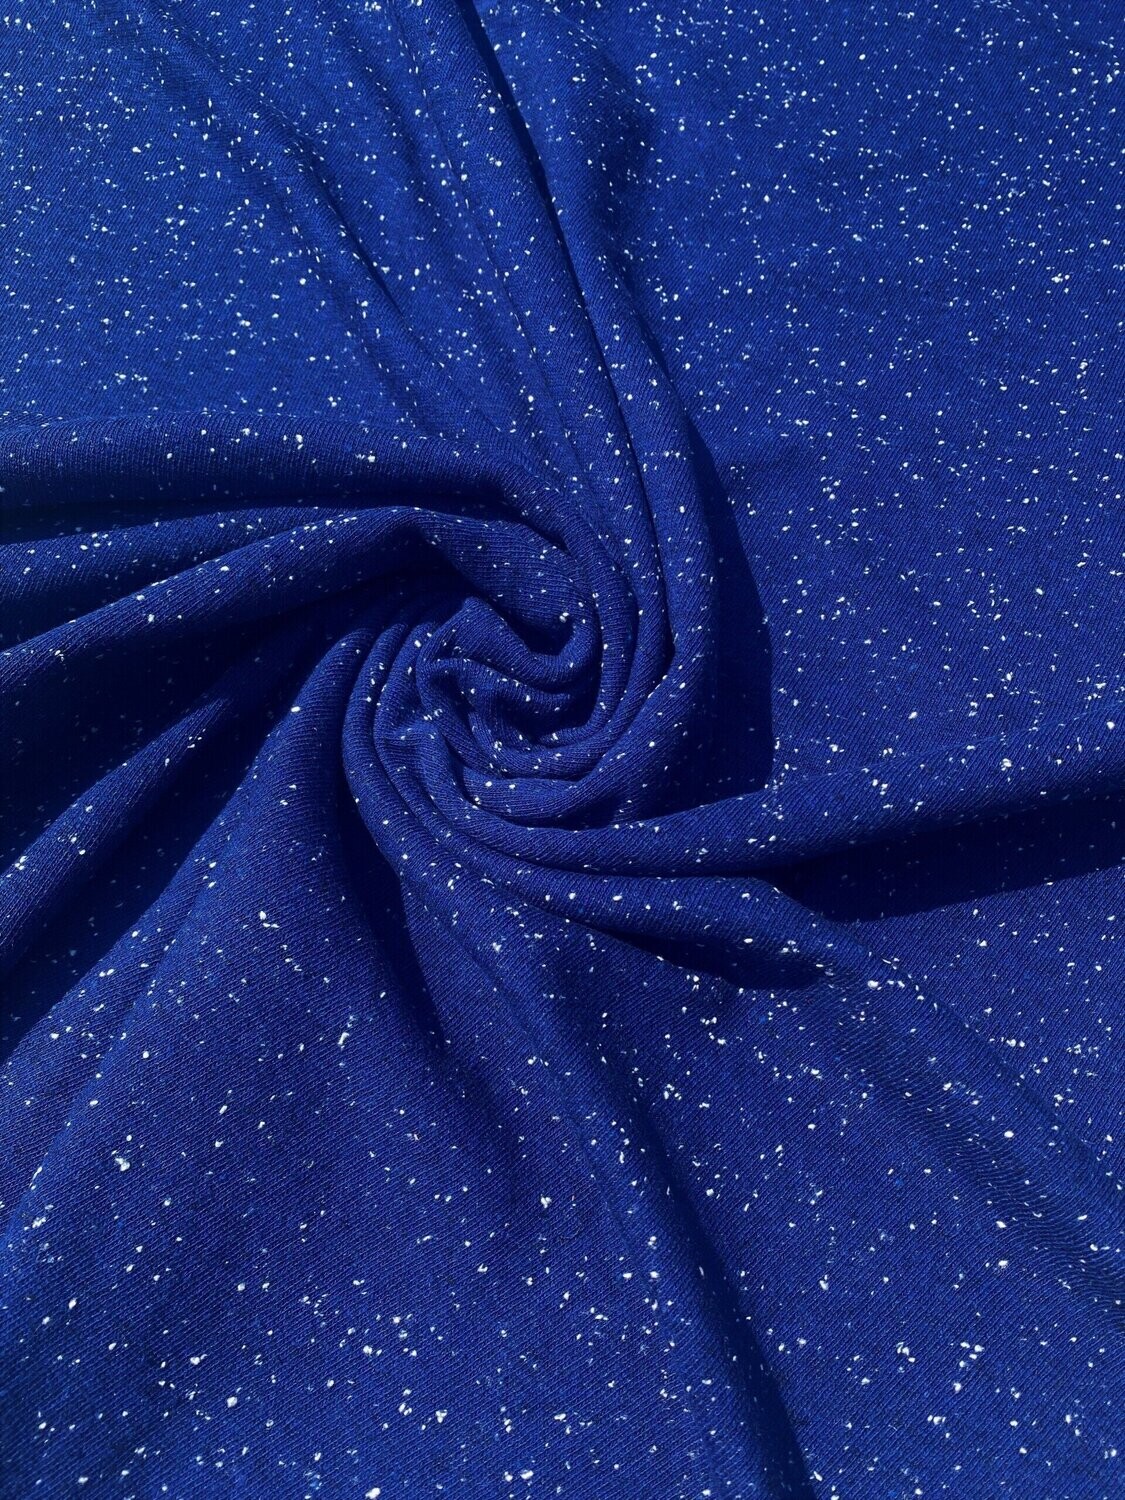 Cosmic Blue Yarn Dyed Hemp Jersey Knit, 55% Hemp, 45% Certified Organic Cotton, Width 30" Tubular, 7.4oz.